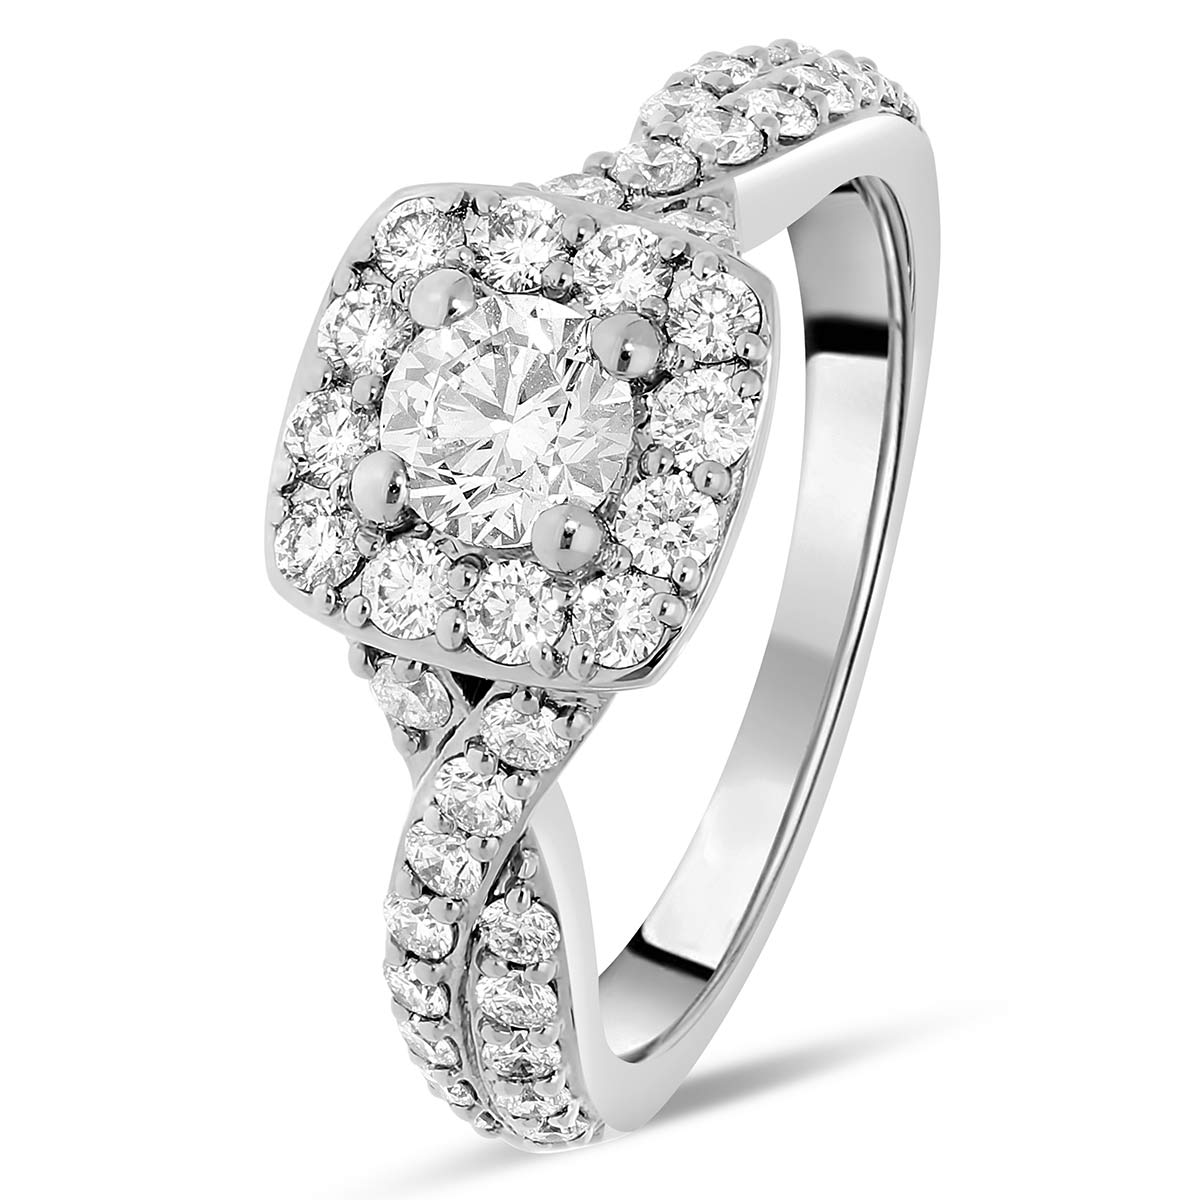 ikaria--solitaires-diamants-certifies-entourage-platine-950-